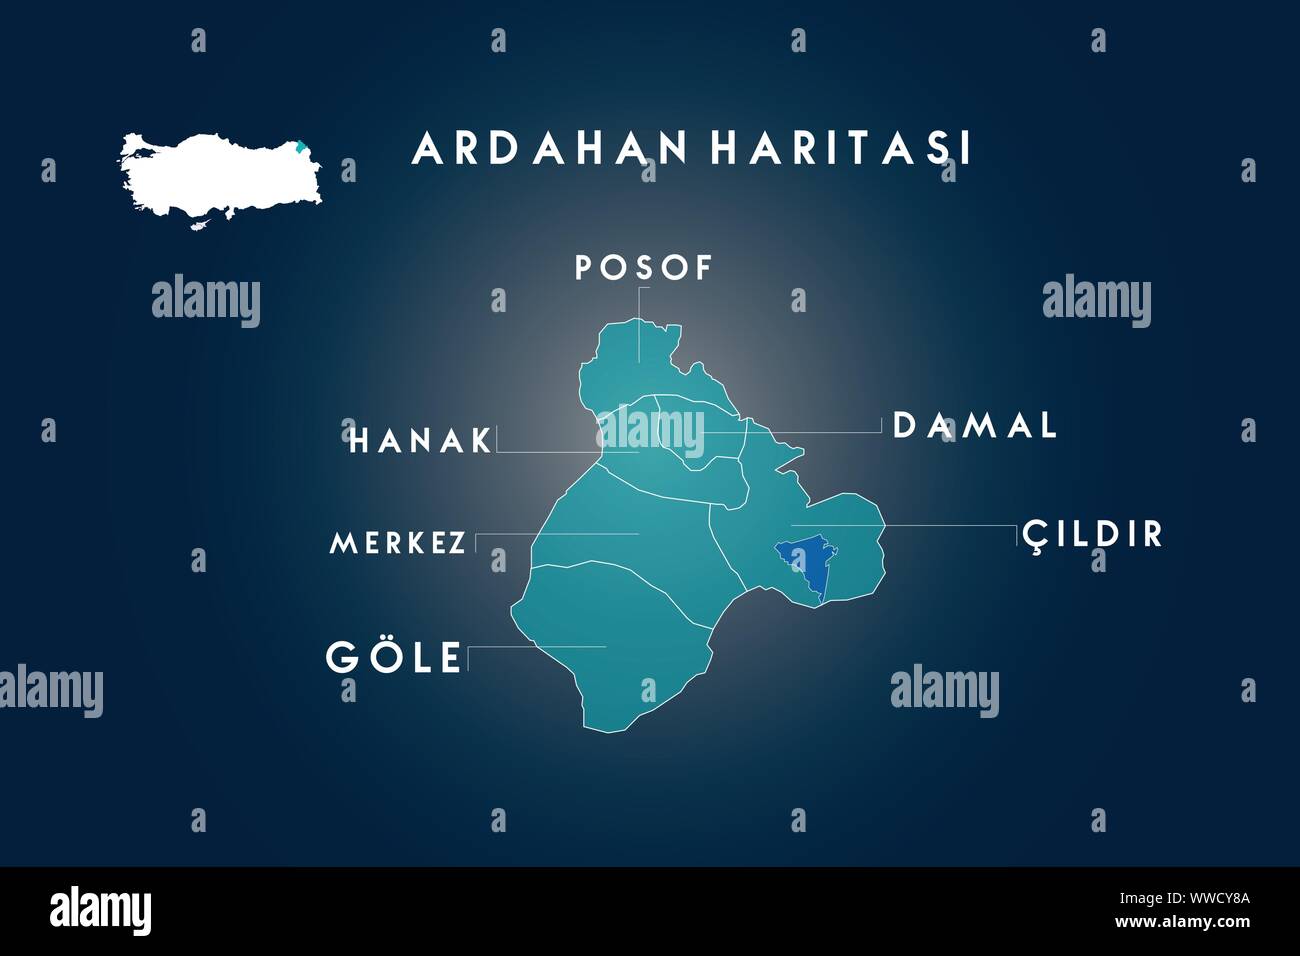 Ardahan districts Posof, Hanak, Damal, Cildir, Gole map, Turkey Stock Vector